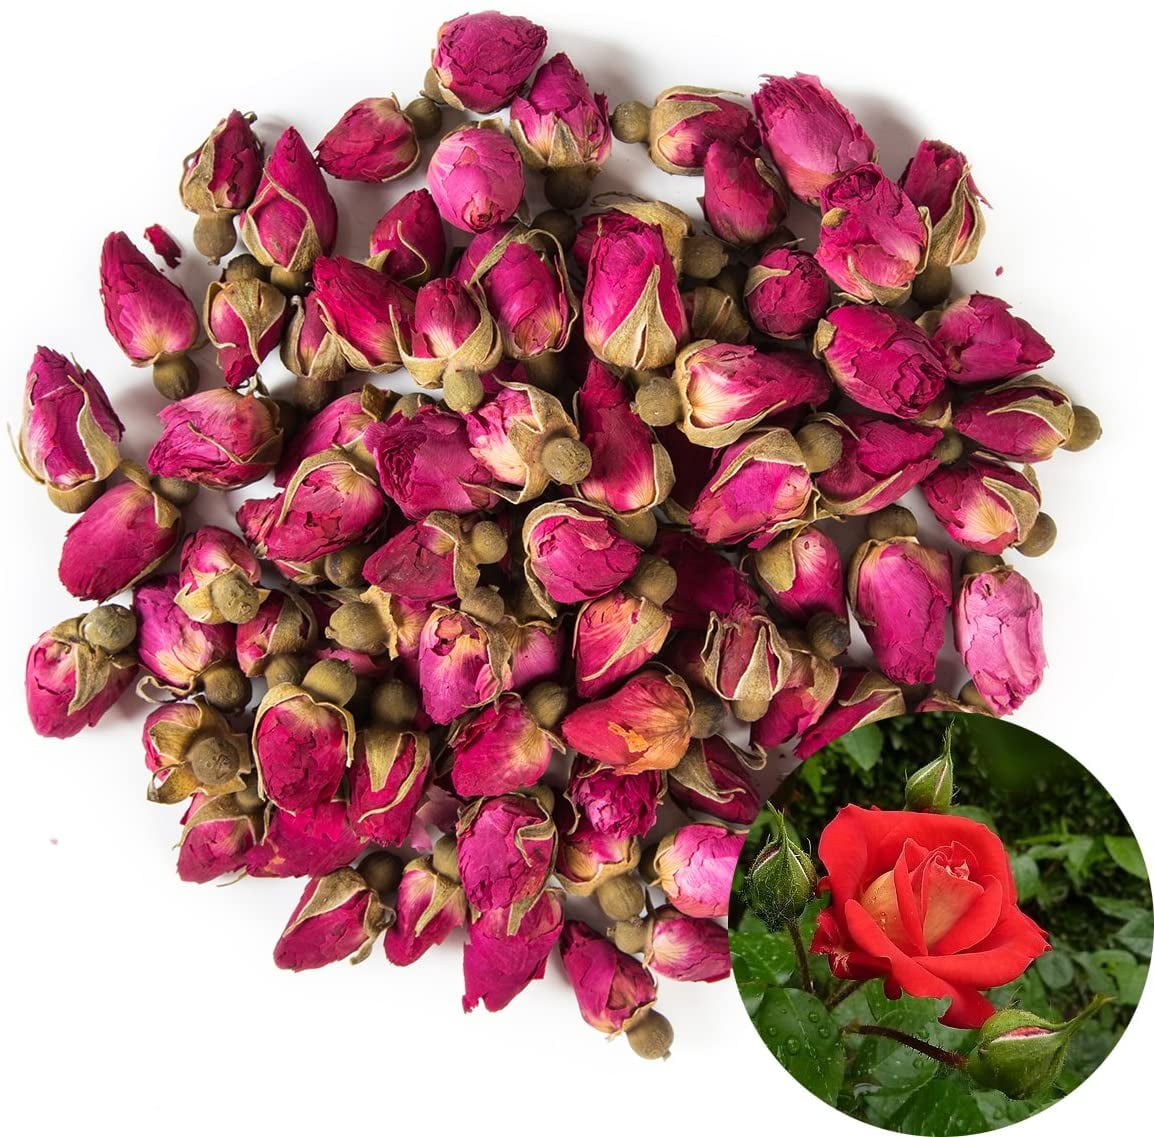 Rose Buds & Petals - Red Stick Spice Company